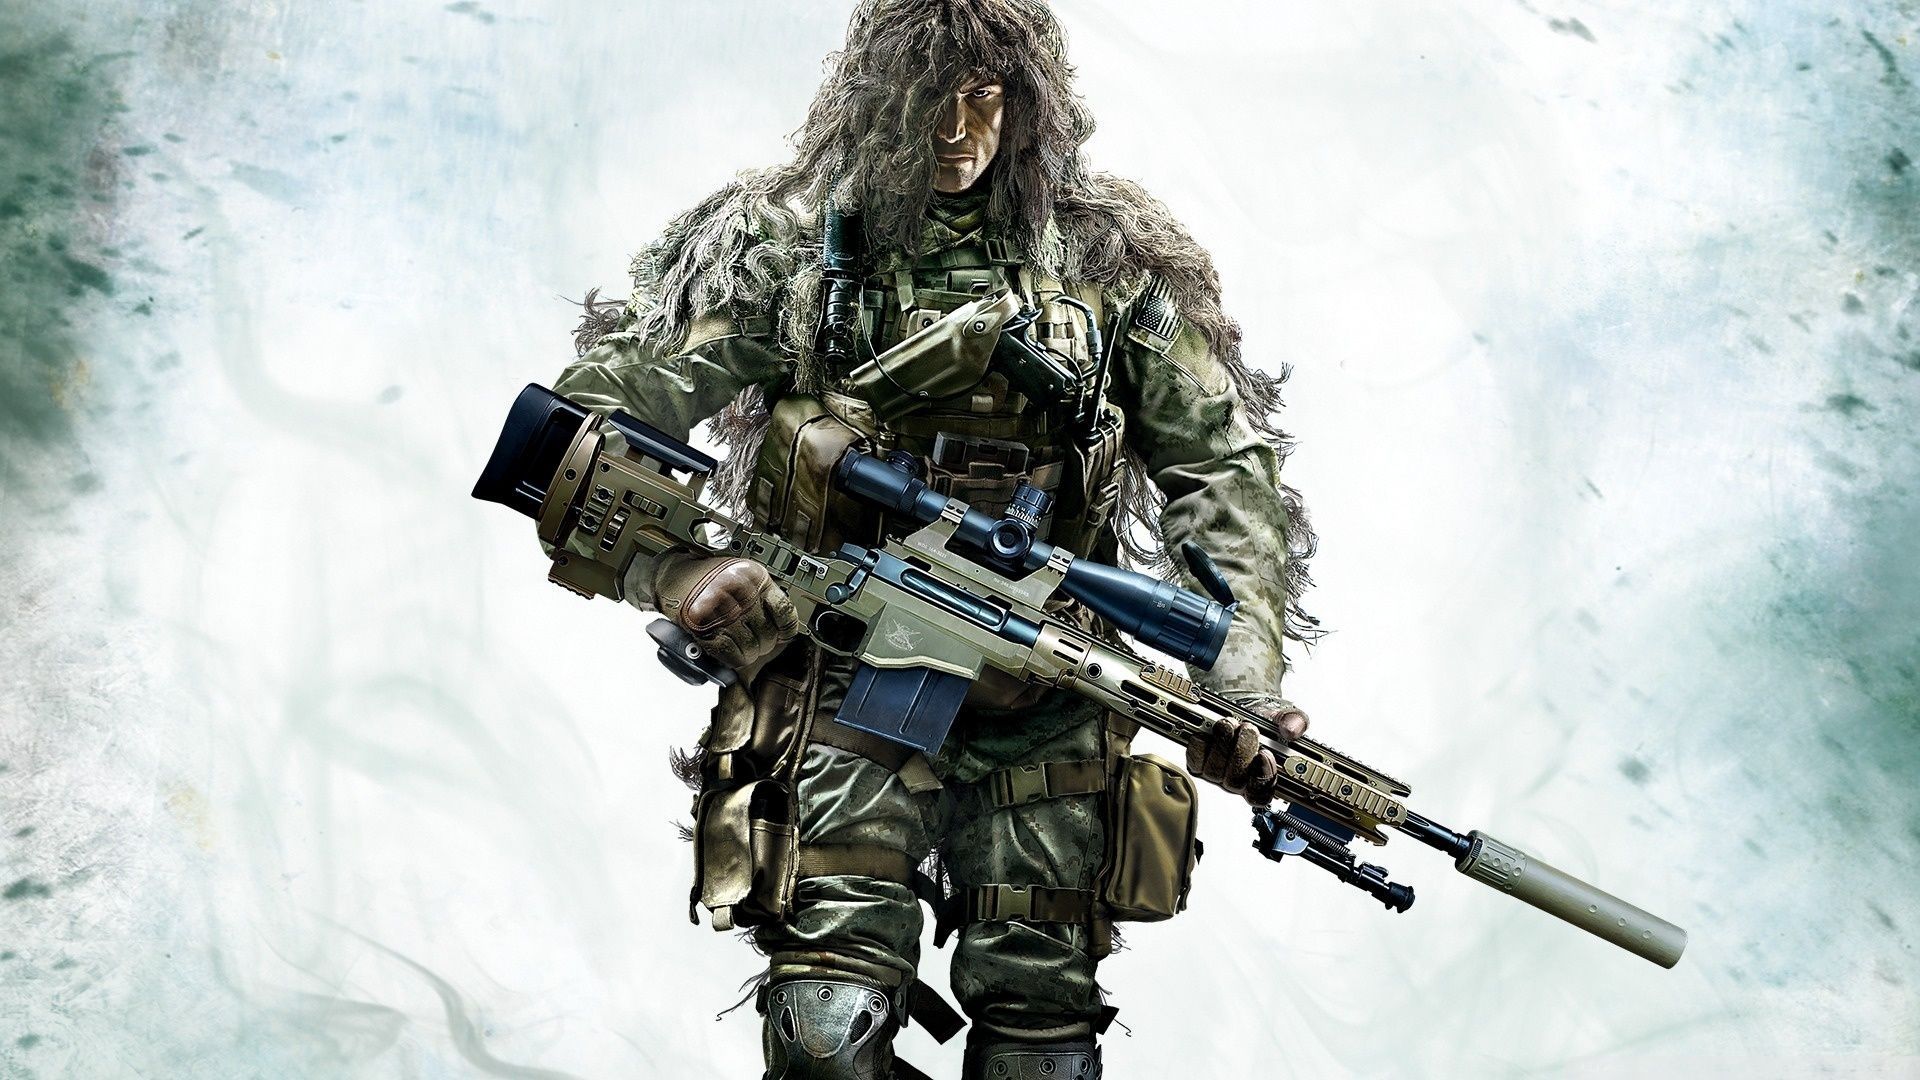 Awesome Sniper Gamer Wallpaper